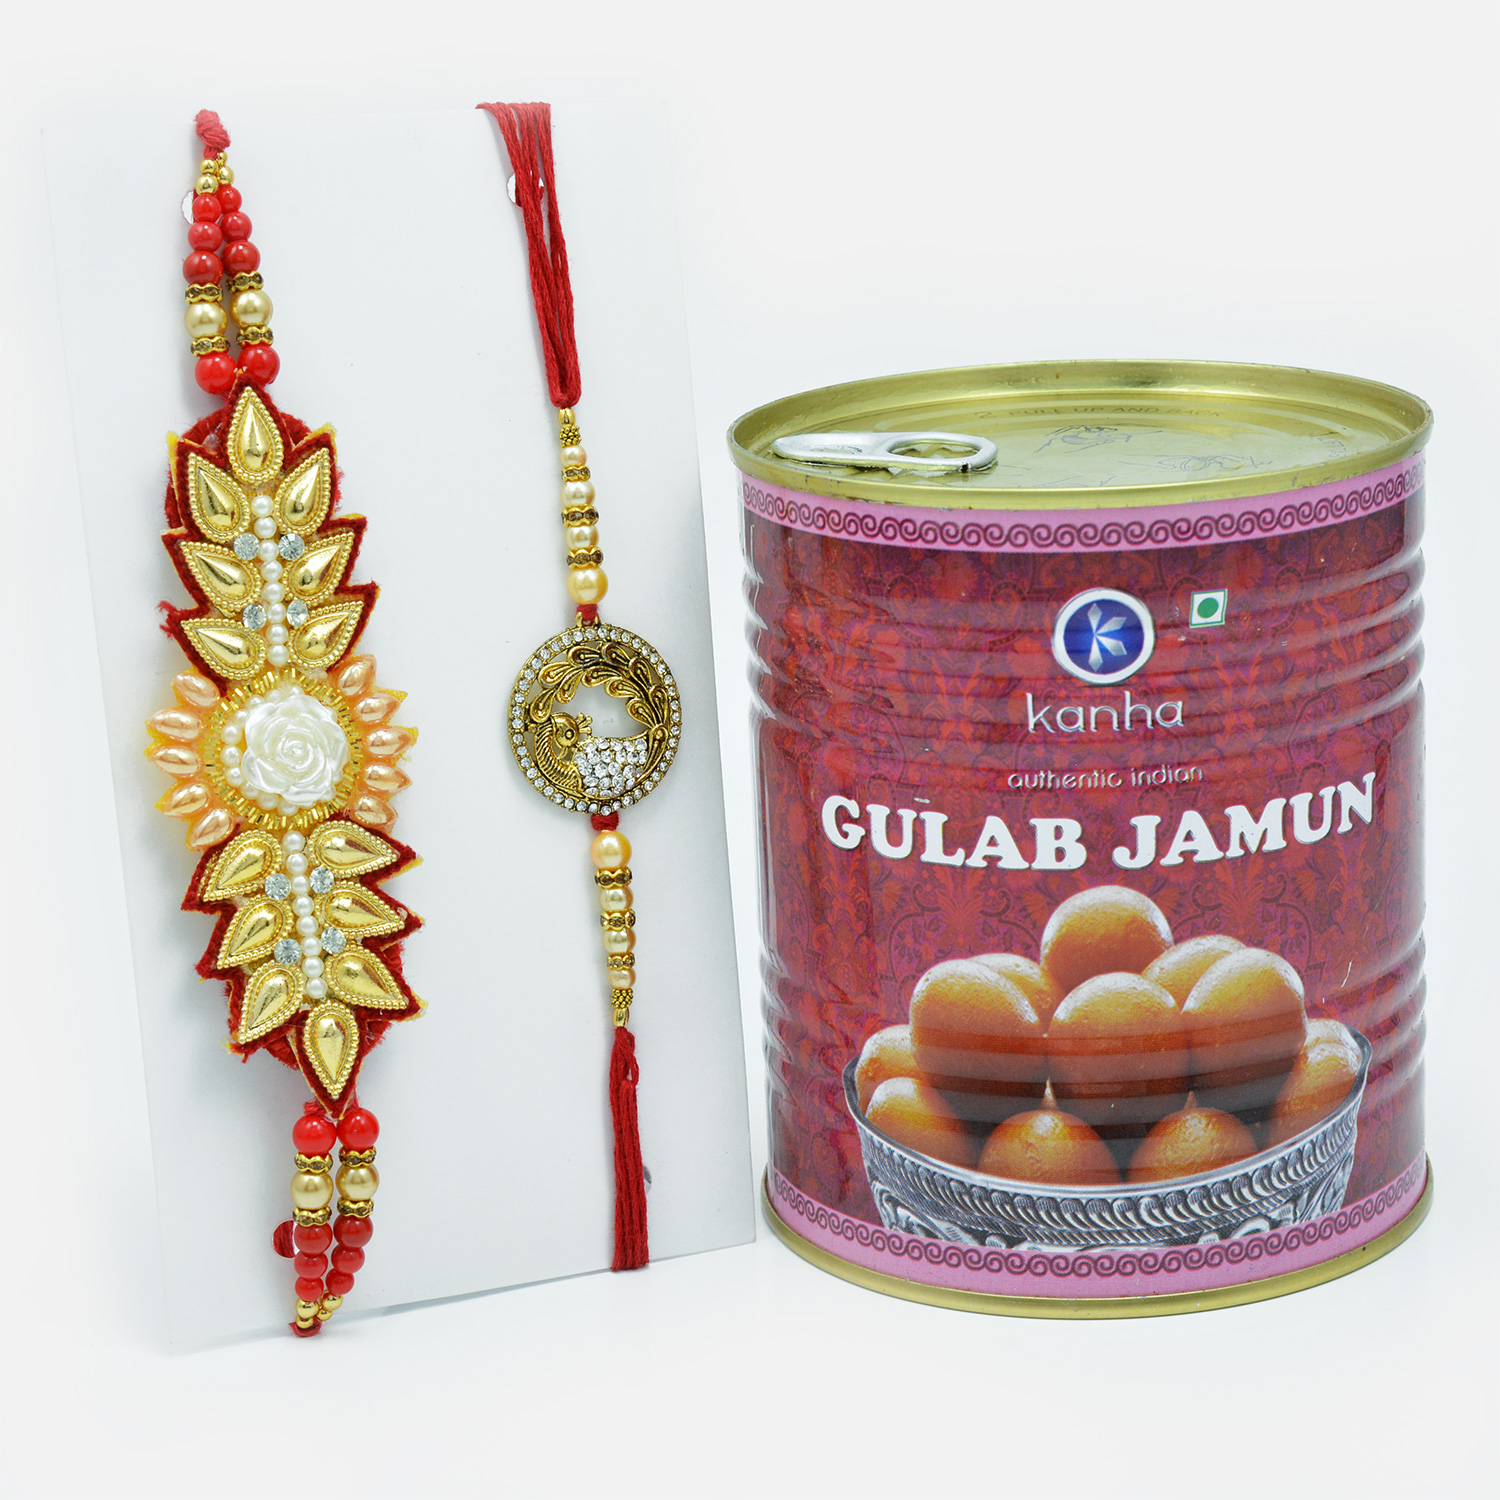 Gold and Diamond Peacock Rakhi and Zardozi Rakhi Set of 2 with Authentic Kanha Gulab Jamun